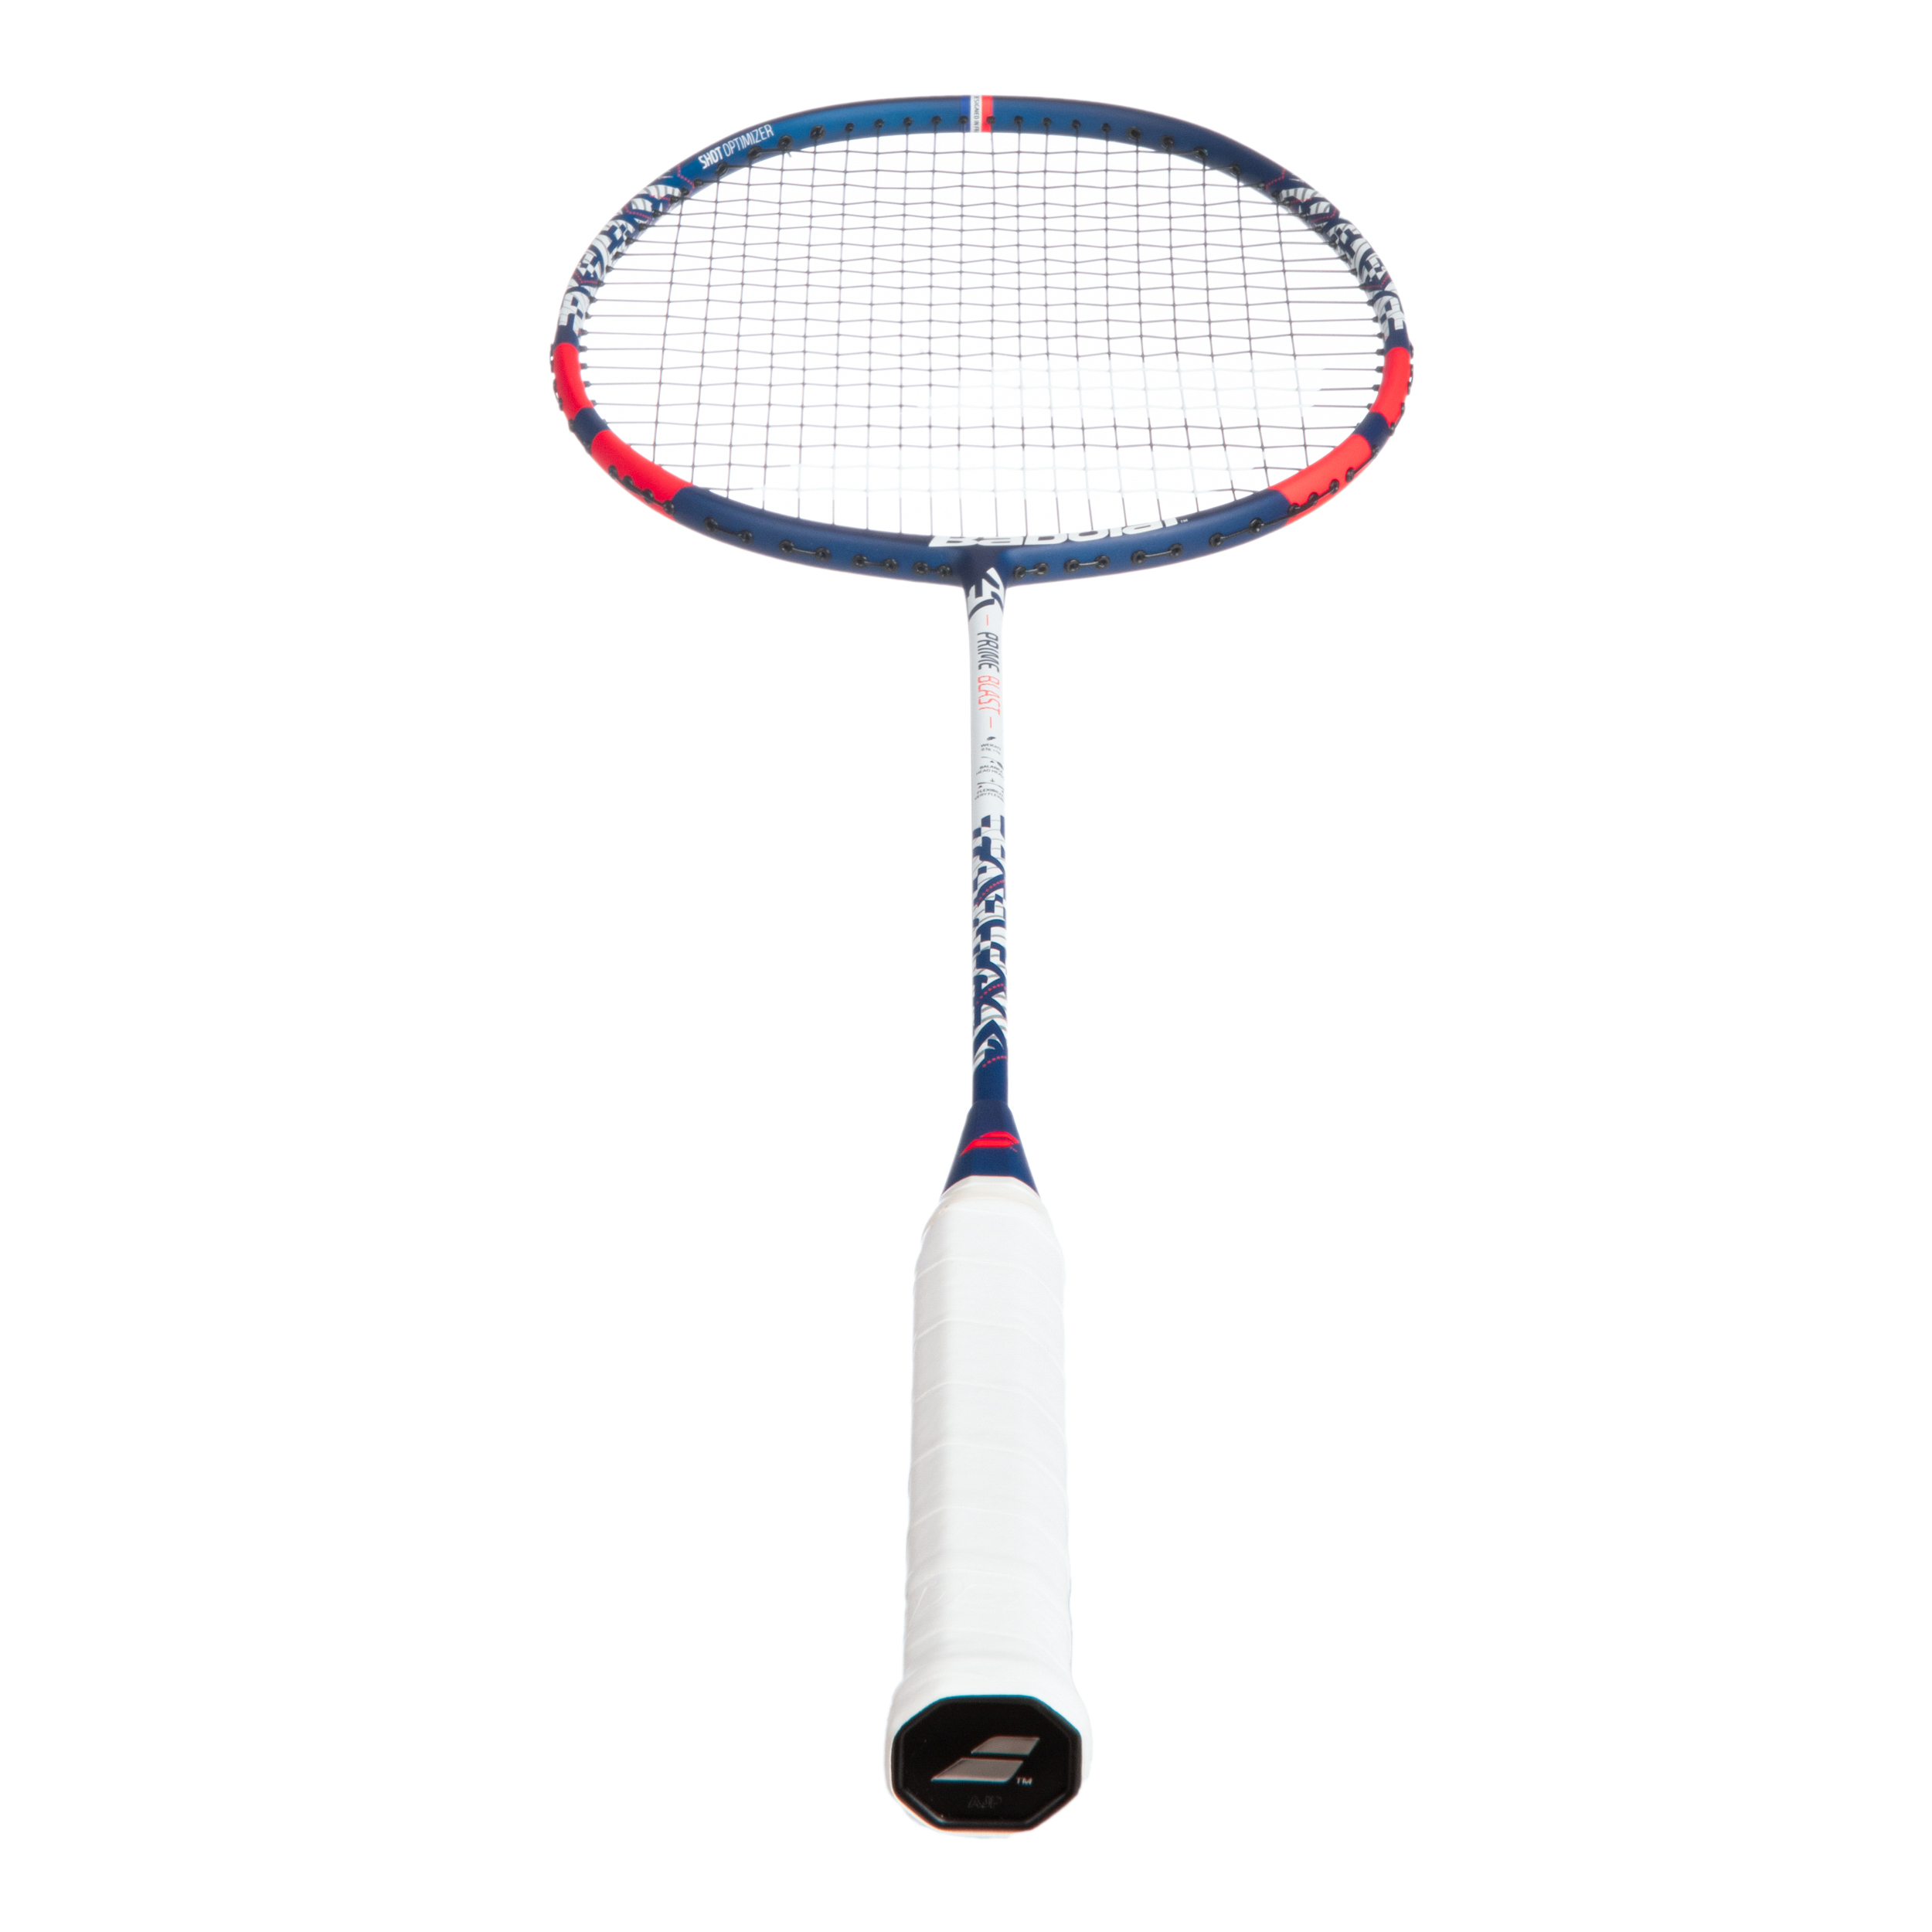 Sac Babolat + Raquette + Volants Badminton - Badminton